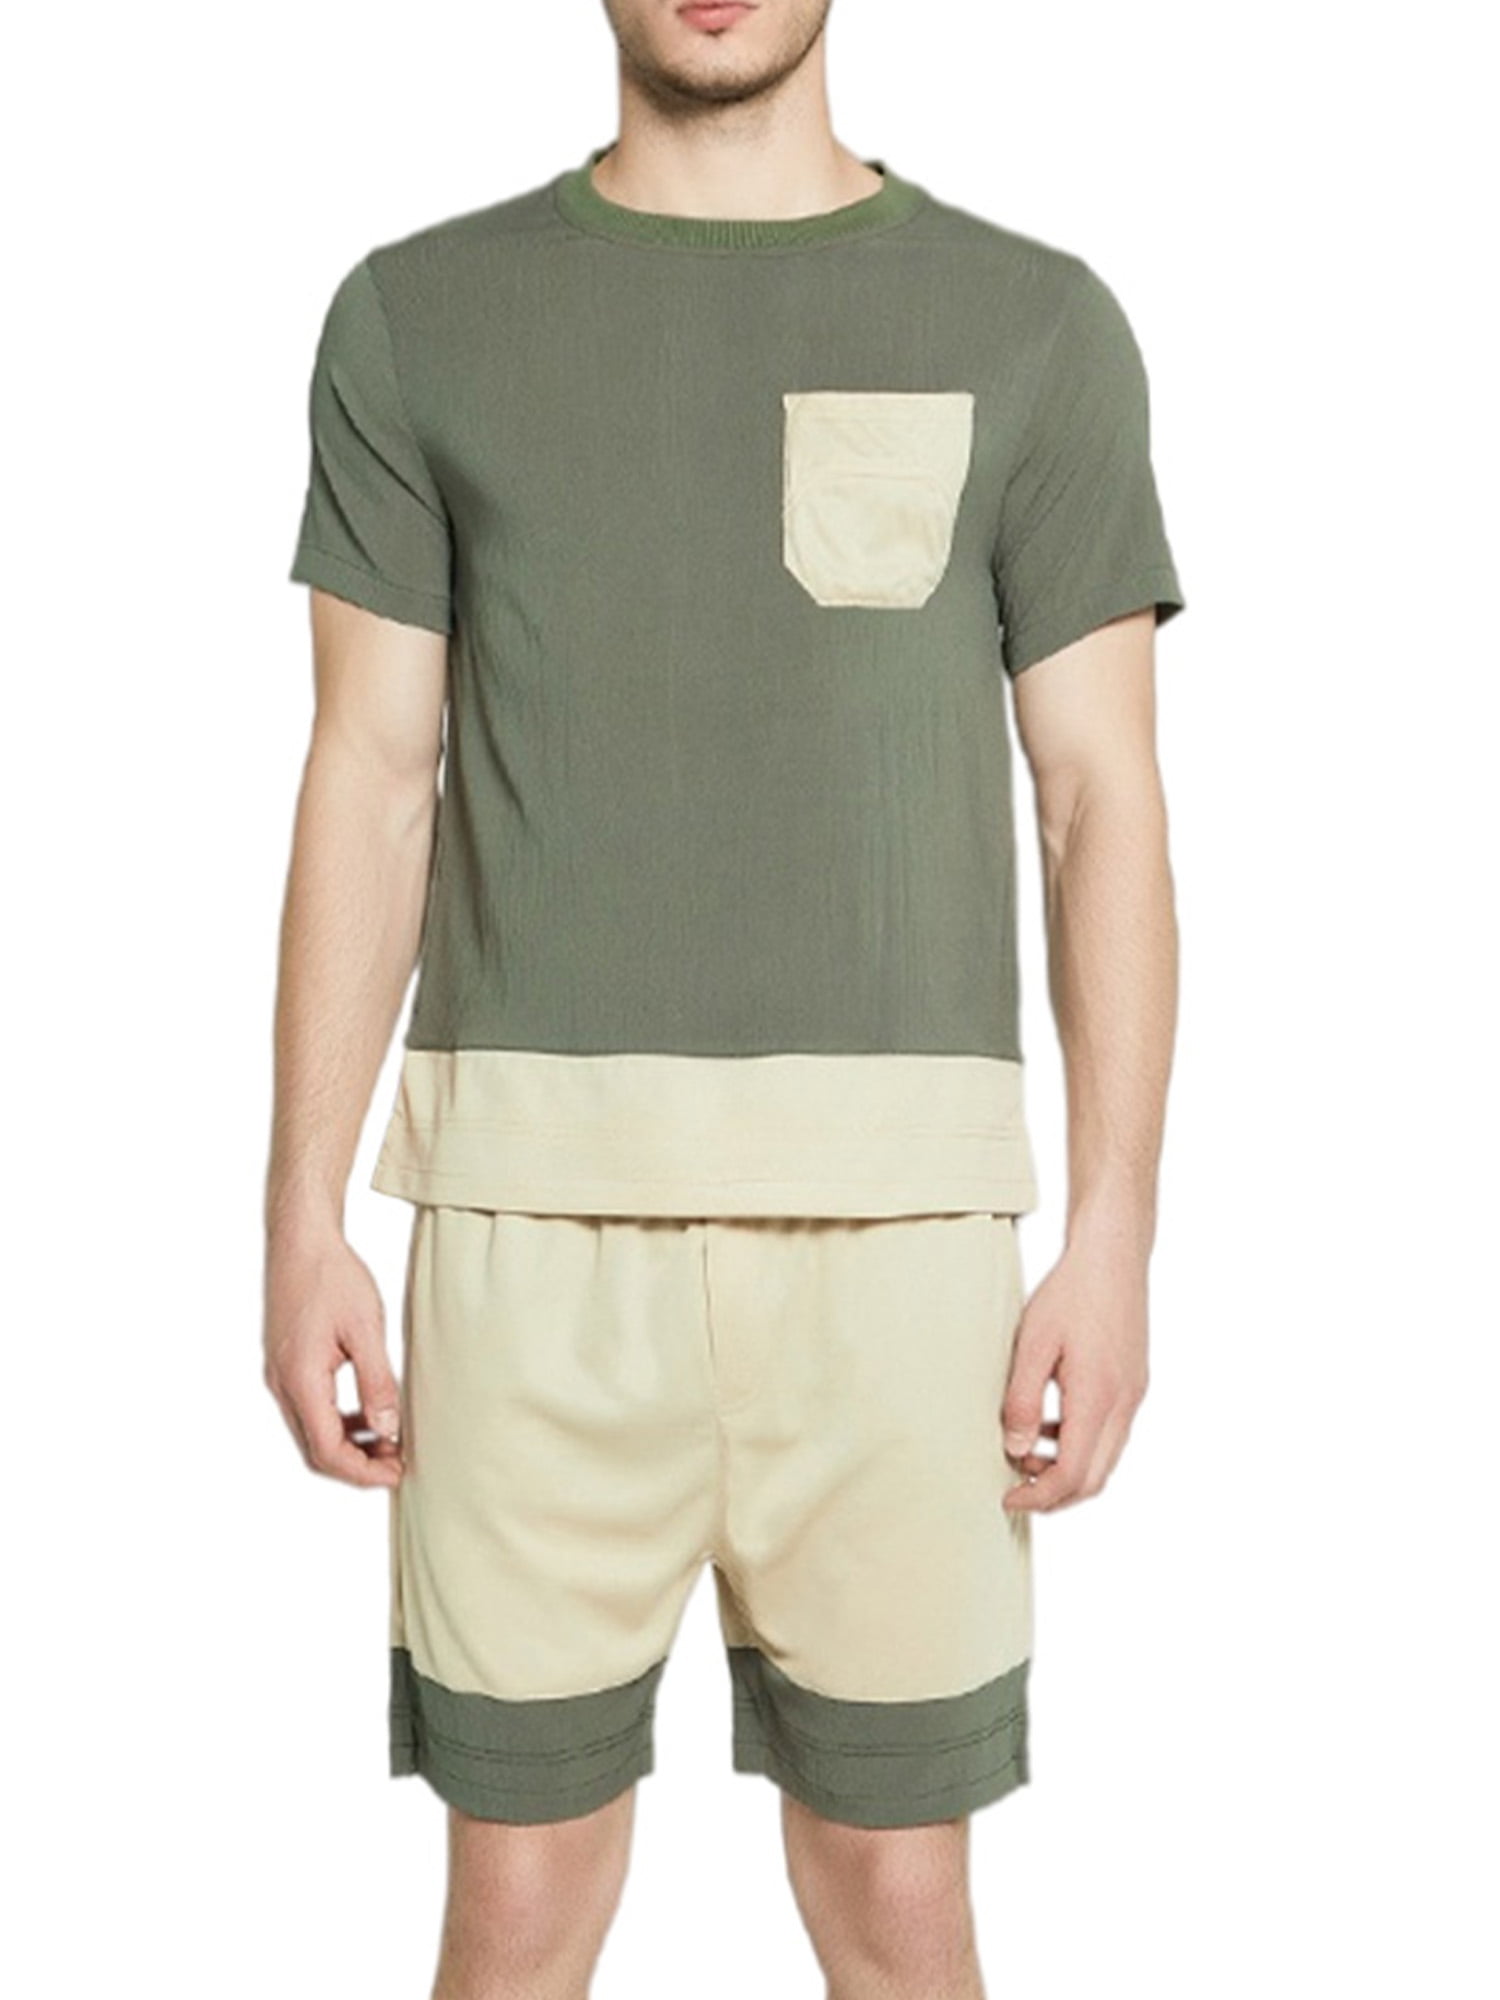 2PCS Mens Short Sleeve Crew Neck T Shirt Tops Shorts Pajamas Sets Loungewear Pjs